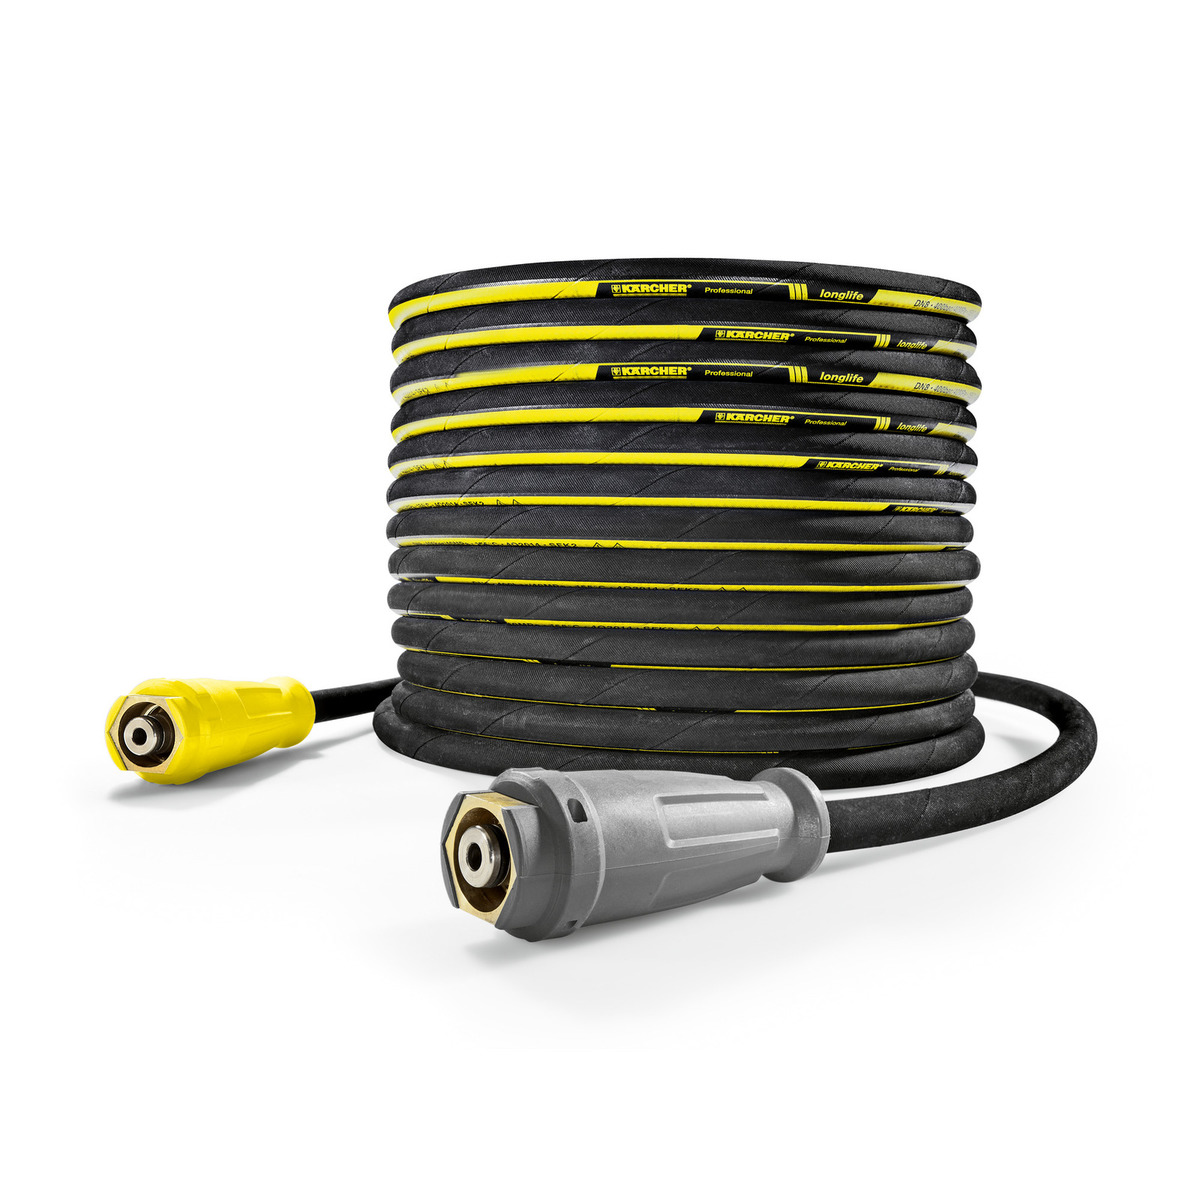 Pressure washer hose, heavy-duty, 98 ft, 5802 PSI, 2 x EASY!Lock